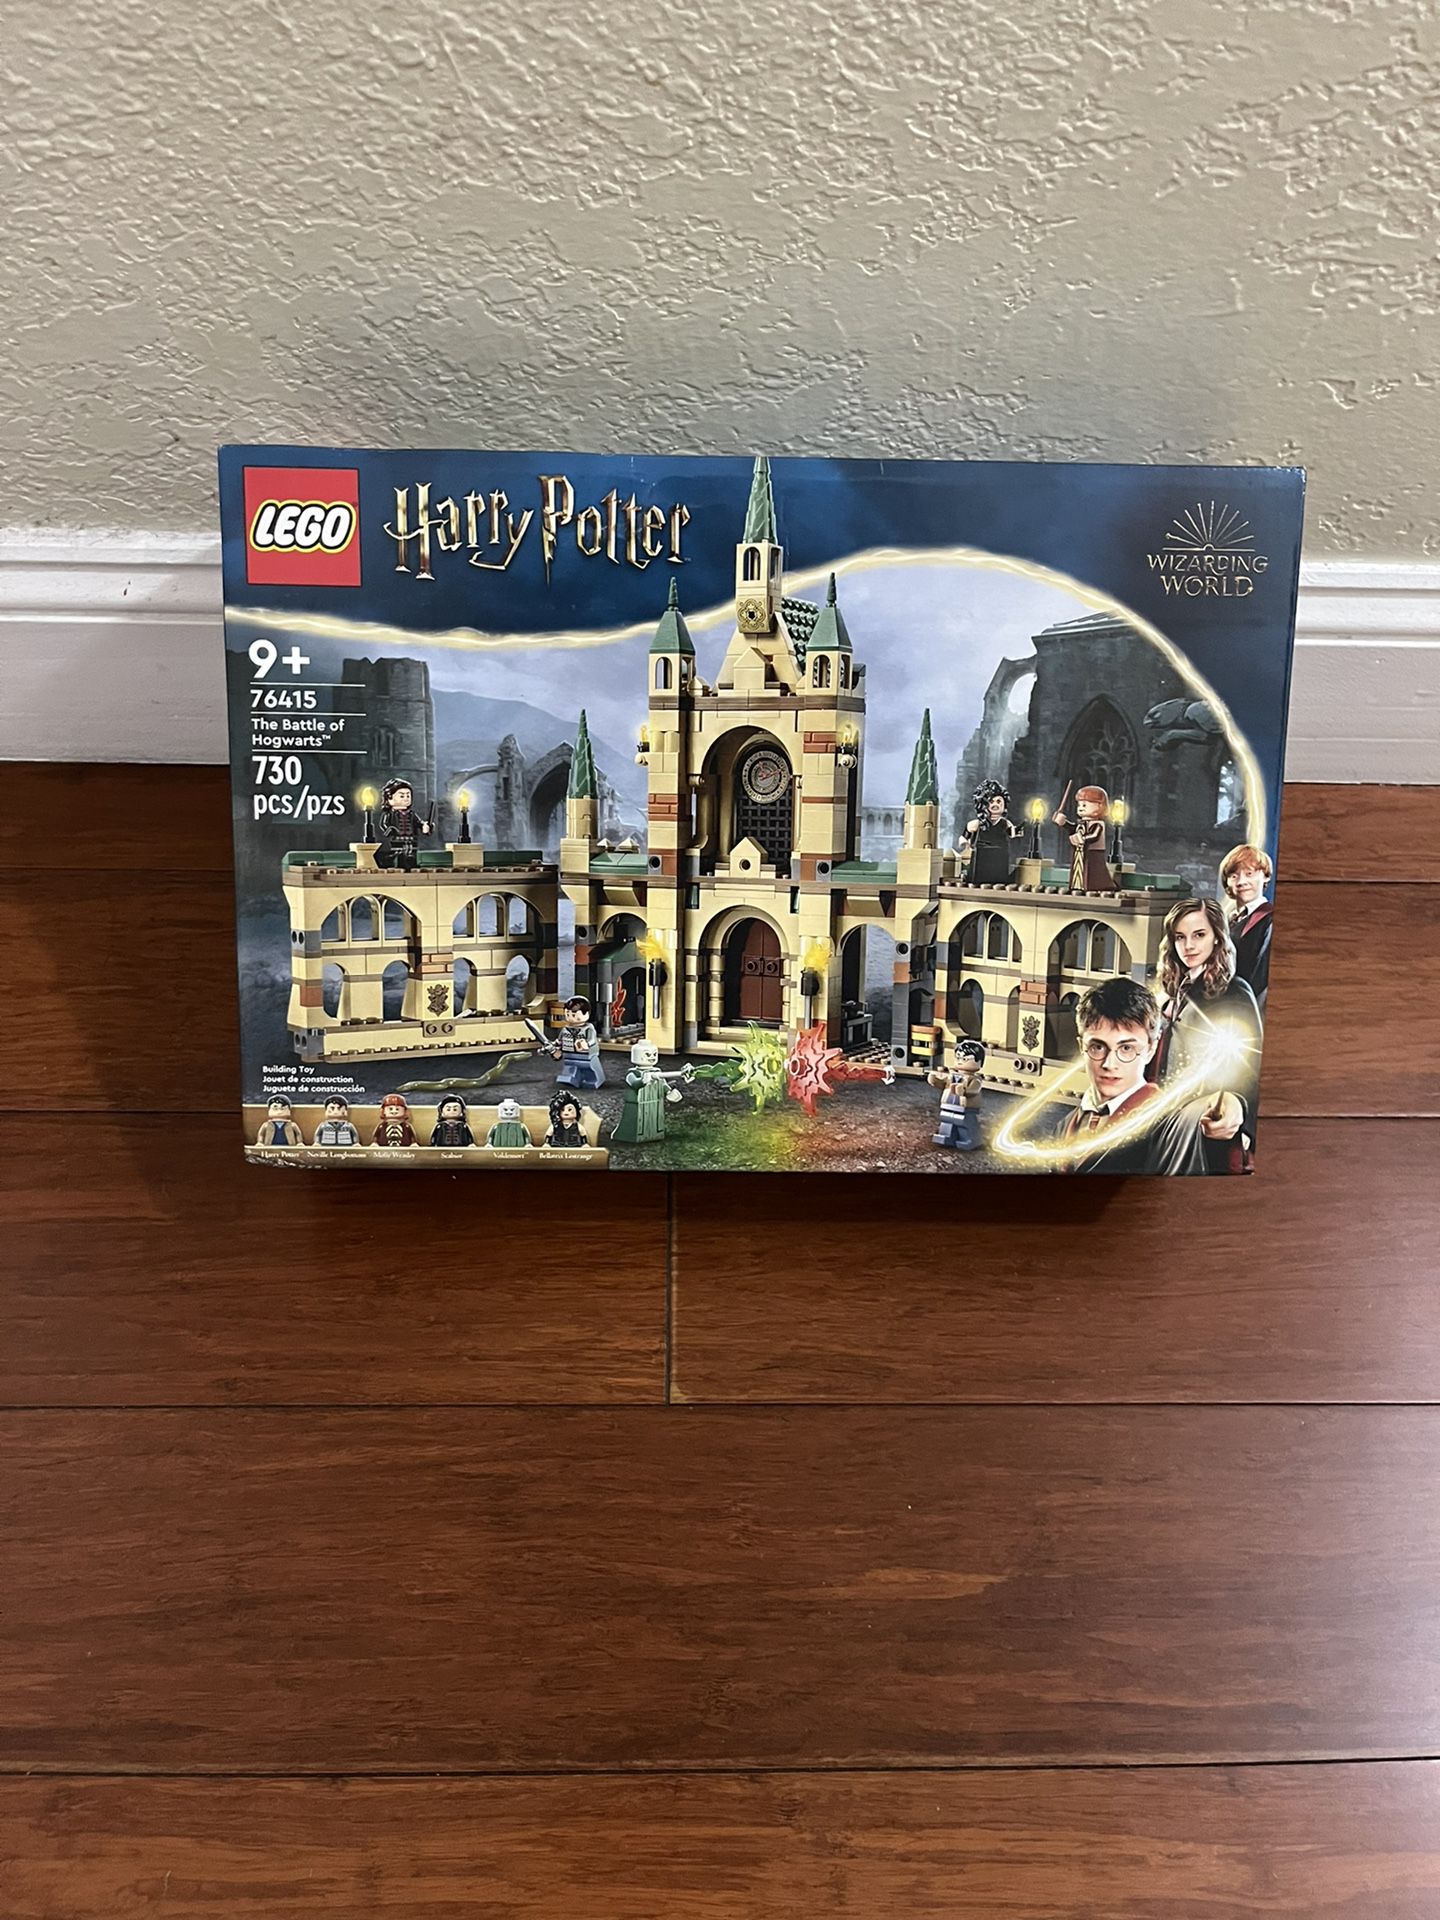 Lego Harry Potter The Battle Of Hogwarts Building Toy Set 76415